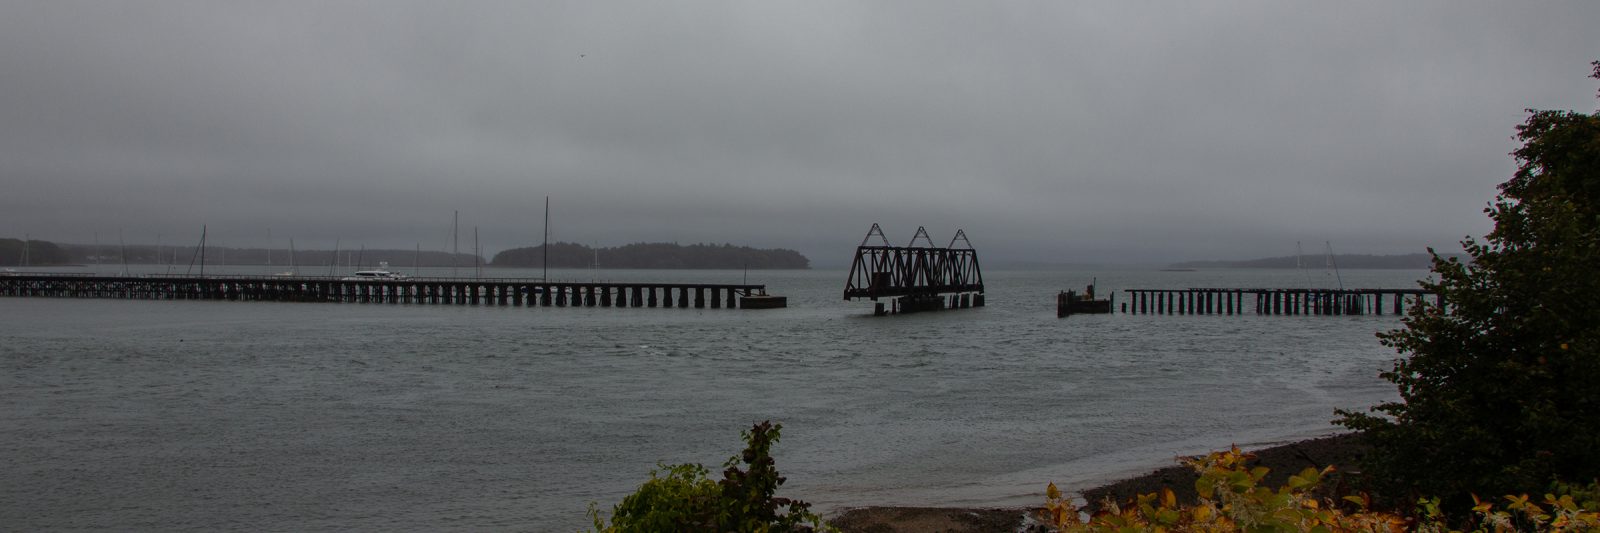 Abandoned rail bridge near East End Beach, Portland, Maine, 2014.